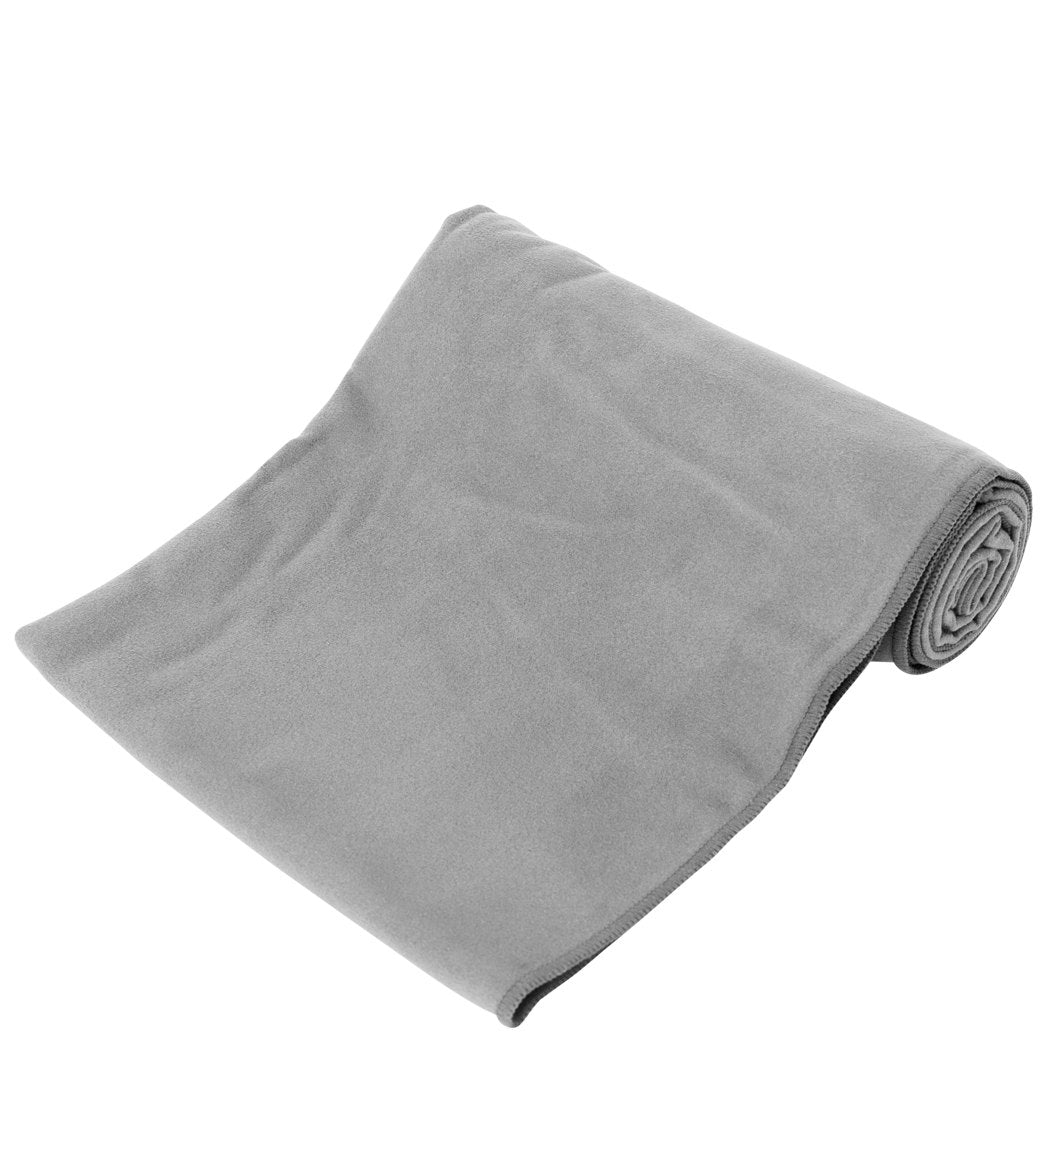 Hilarisch collegegeld kwaadheid de vrije loop geven Manduka eQua Yoga Mat Towel at EverydayYoga.com